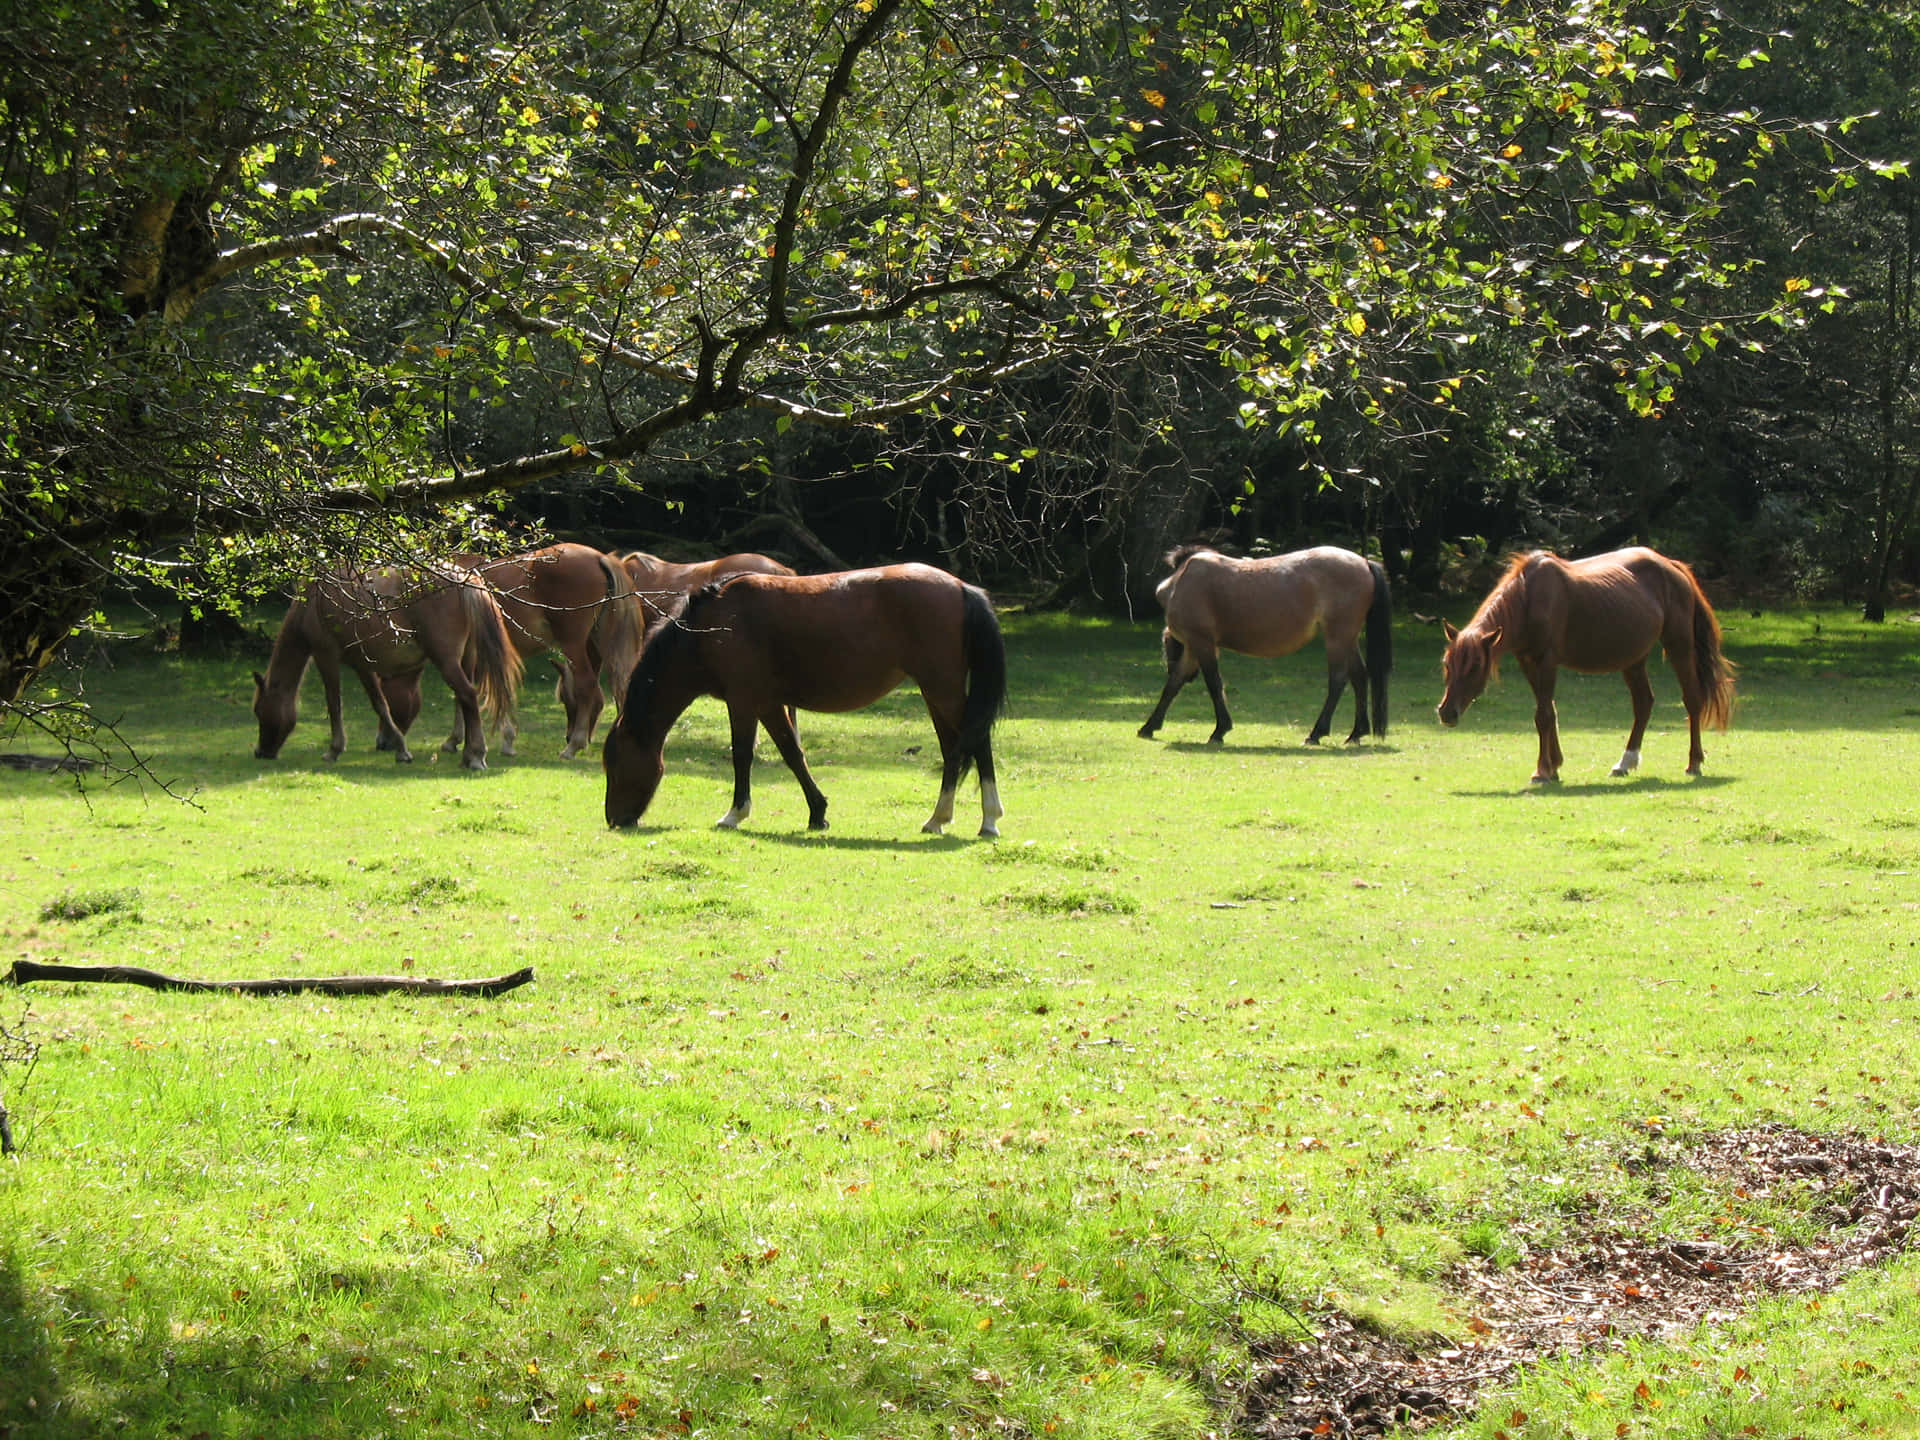 A playful pony frolics through an open meadow